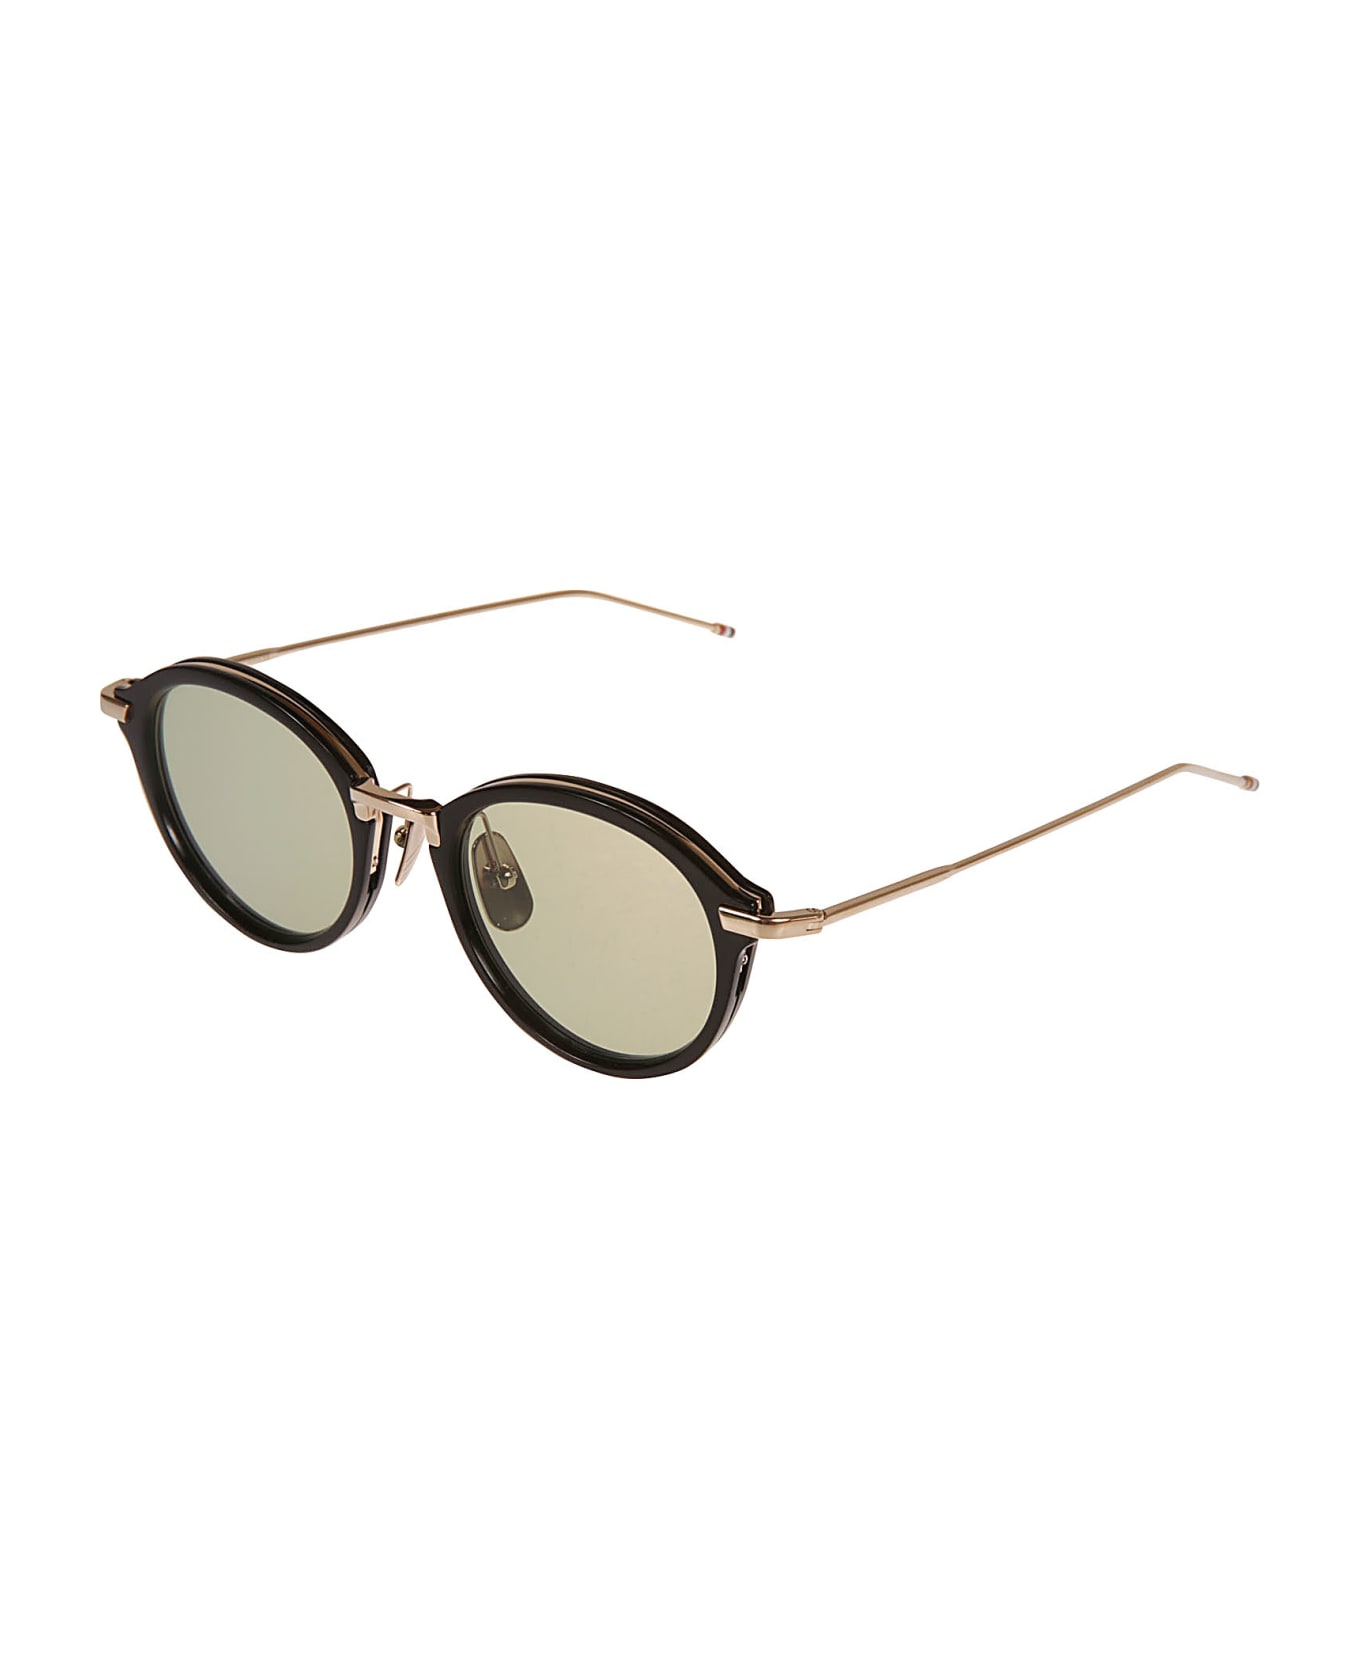 Thom Browne Classic Round Frame Sunglasses - Black